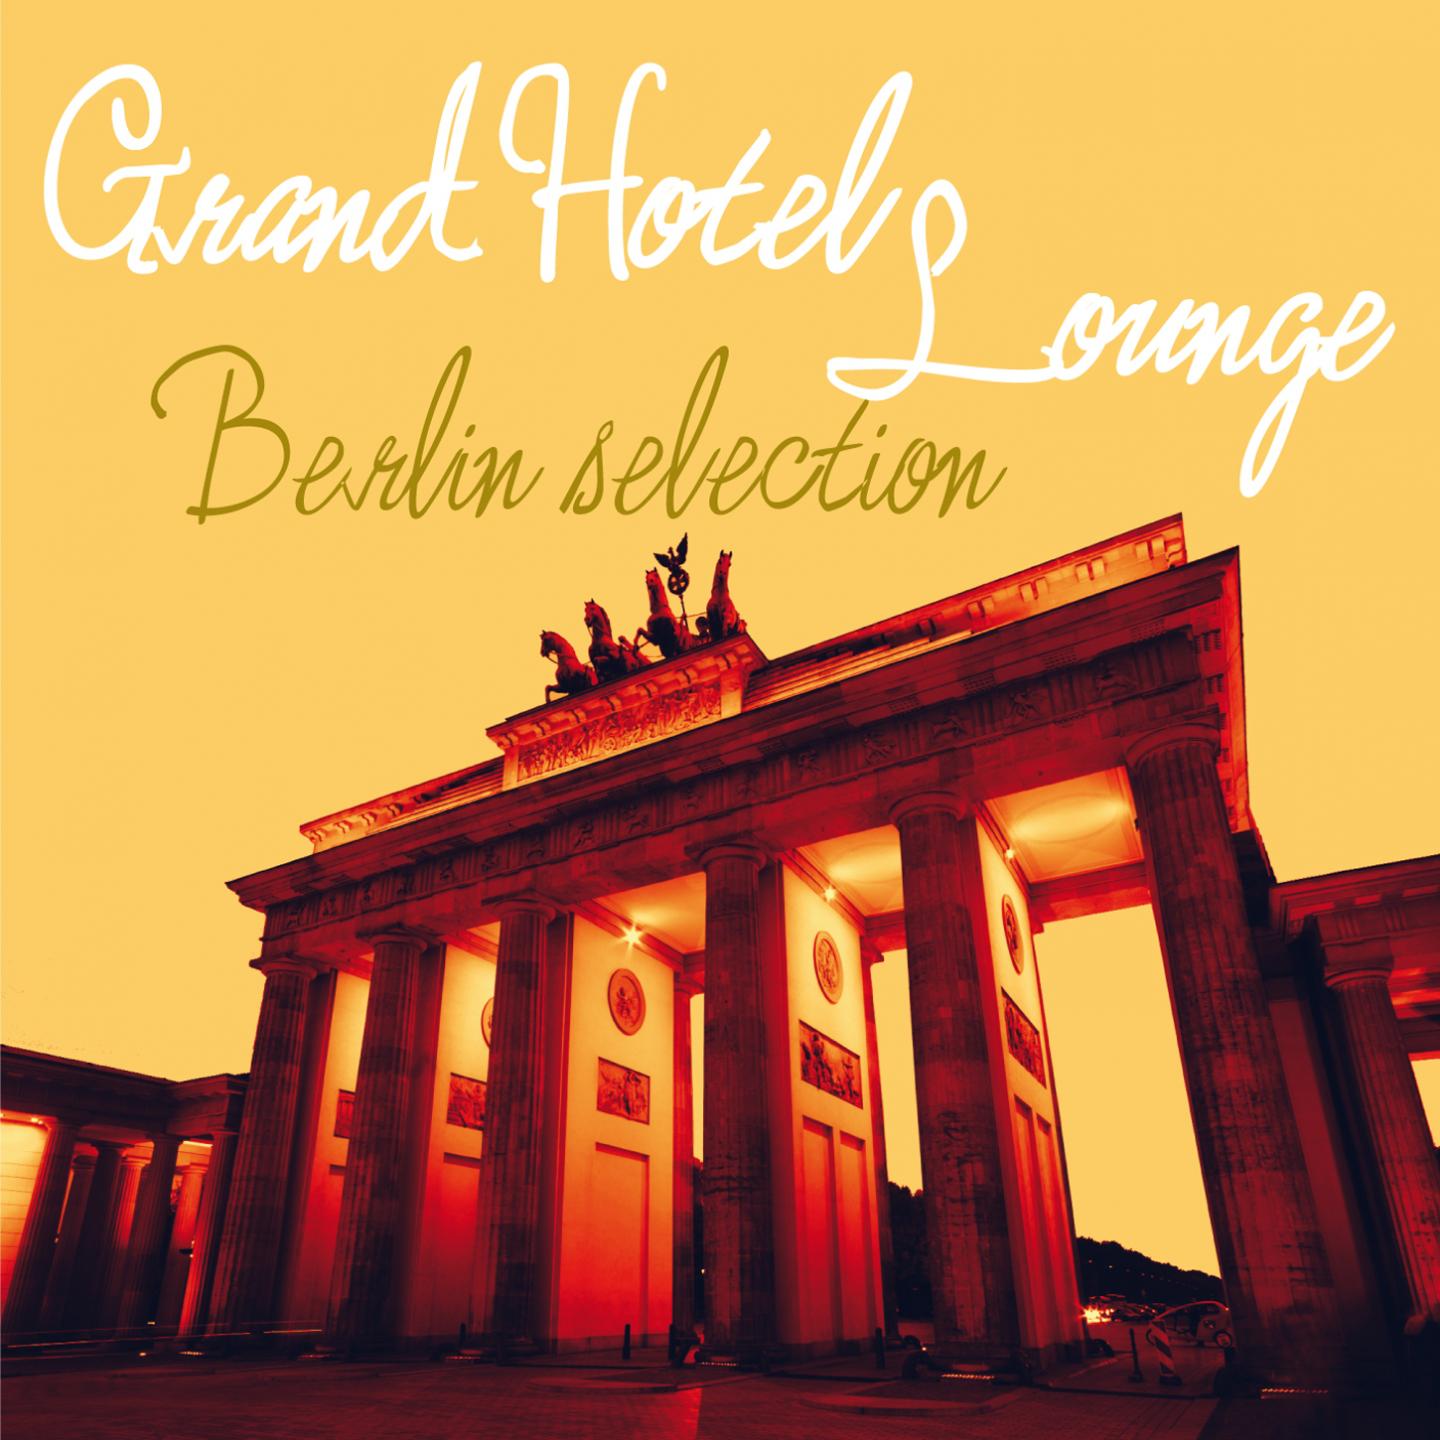 Grand Hotel Lounge (Berlin Selection)